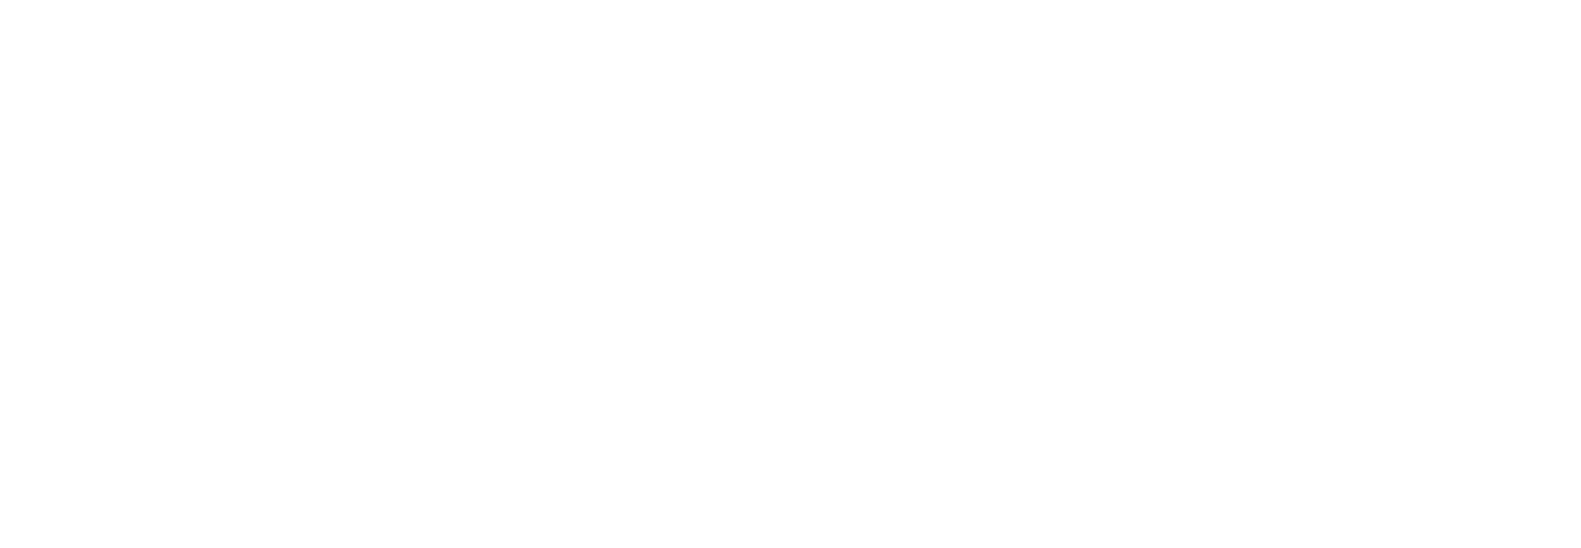 Unimicron logo large for dark backgrounds (transparent PNG)